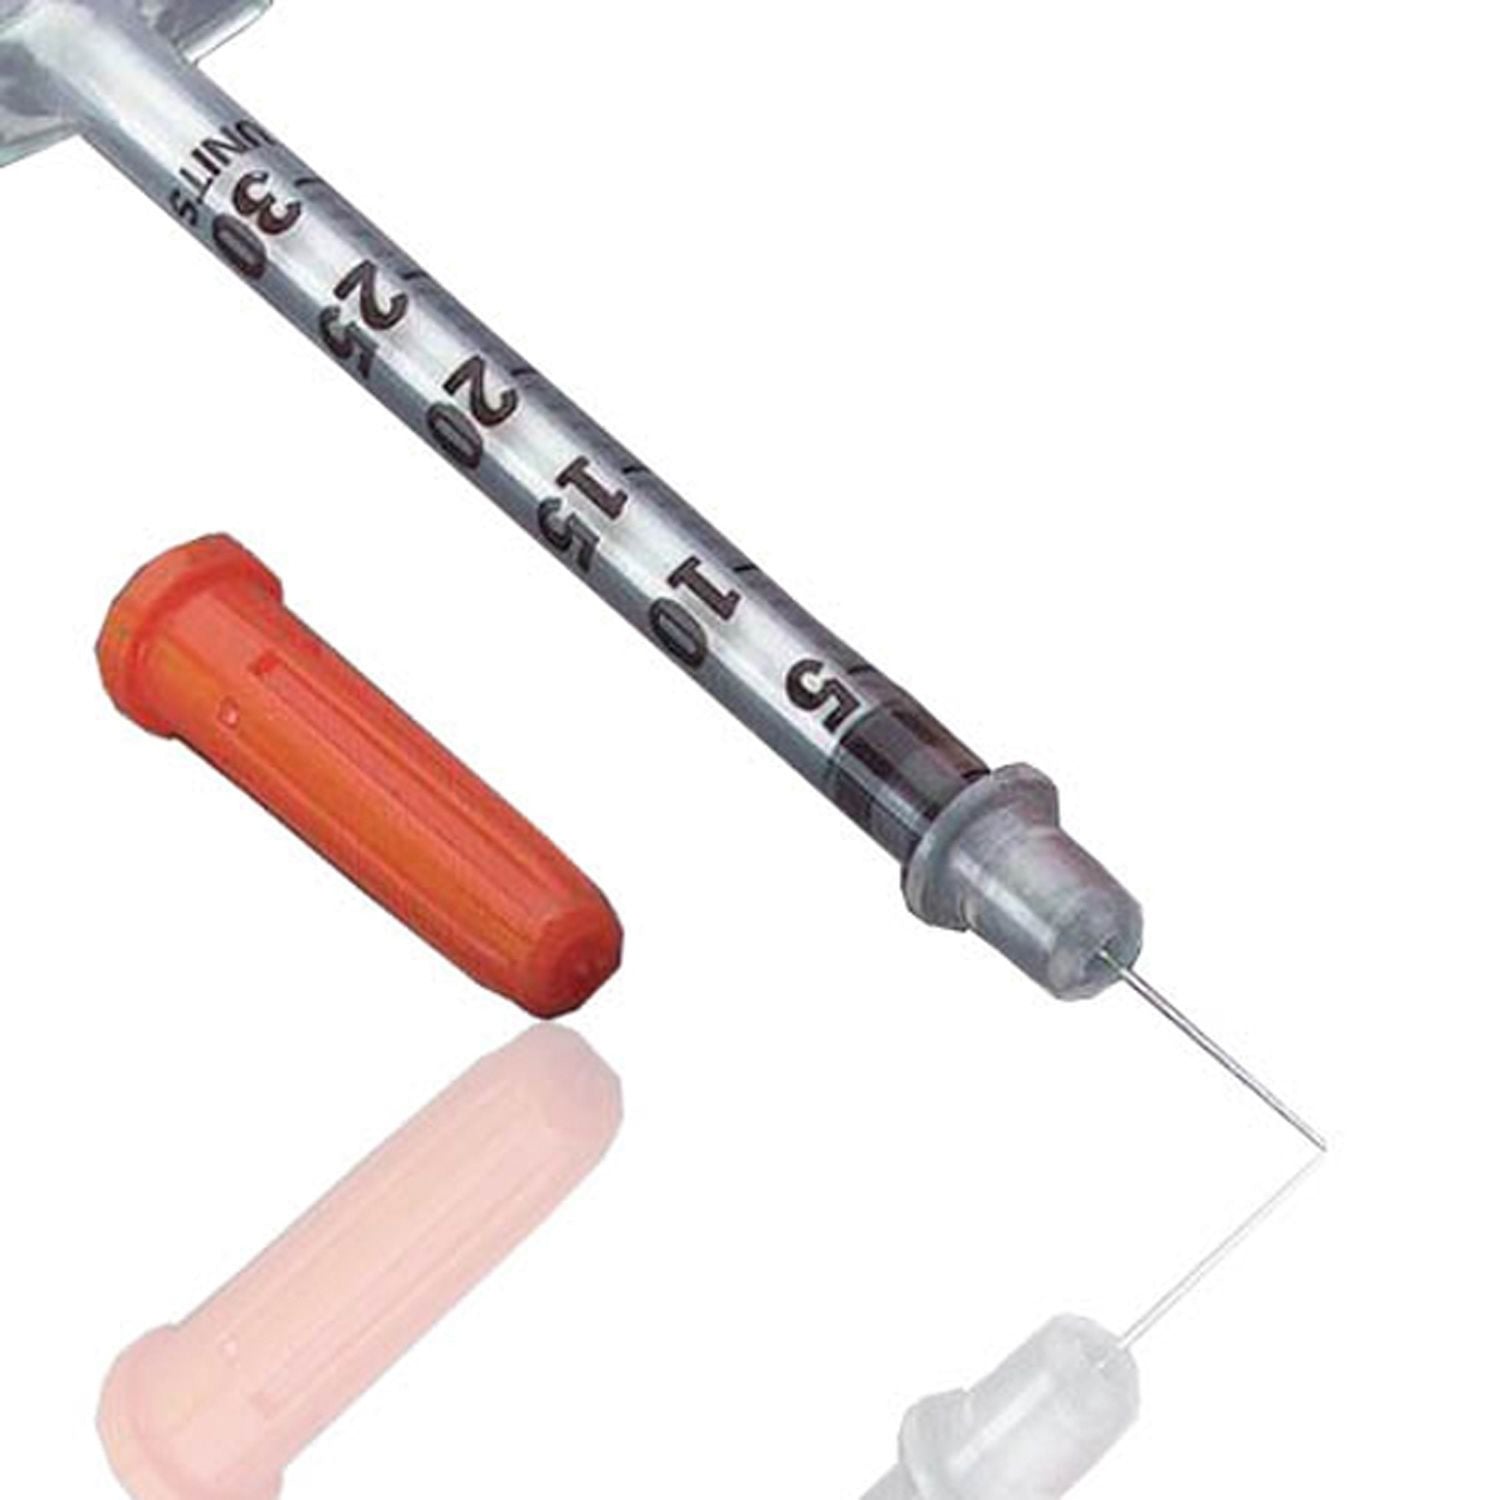 BD Microfine Insulin Syringe | 1ml | Pack of 200 (1)